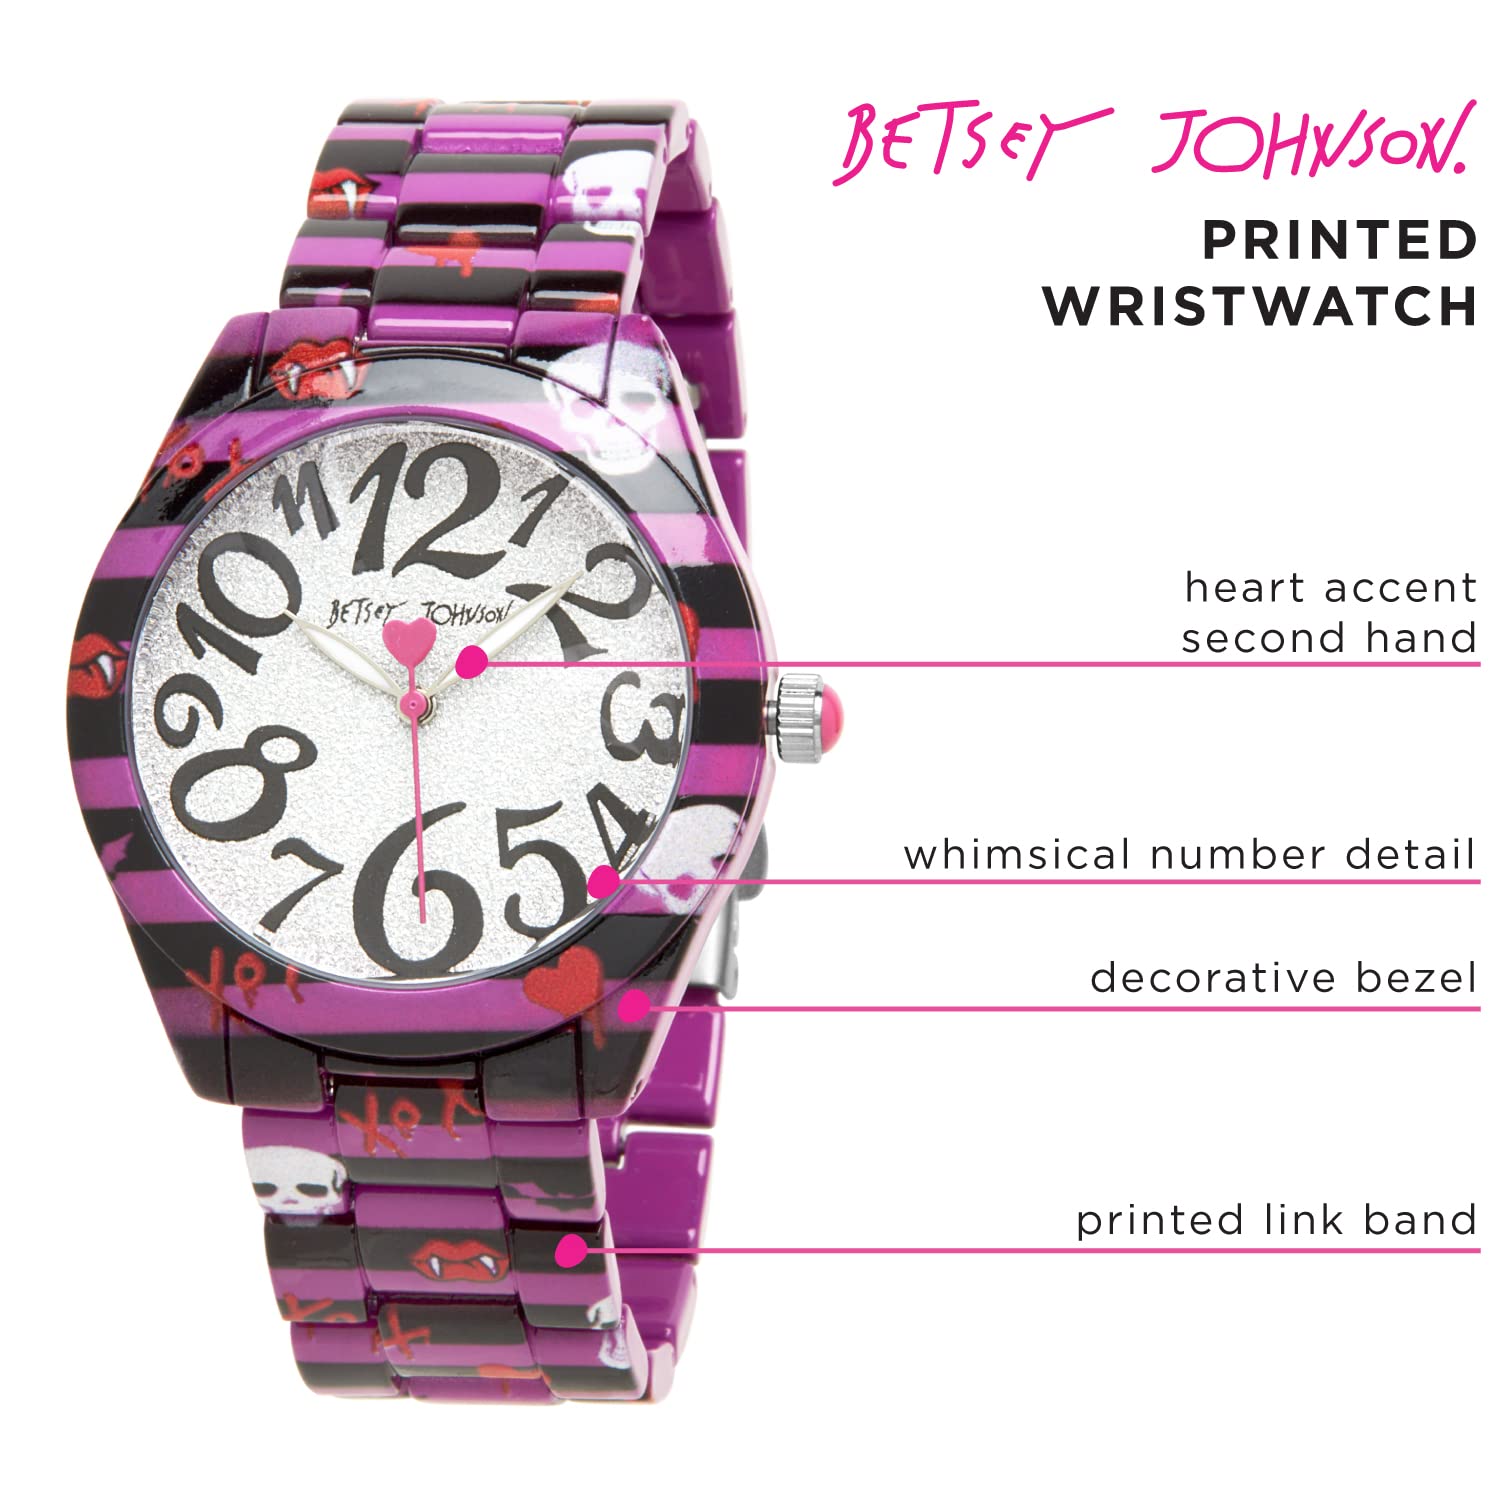 Betsey Johnson Women's Watch – Time Skating Wristwatch, 3 Hand Quartz Movement: BJW034